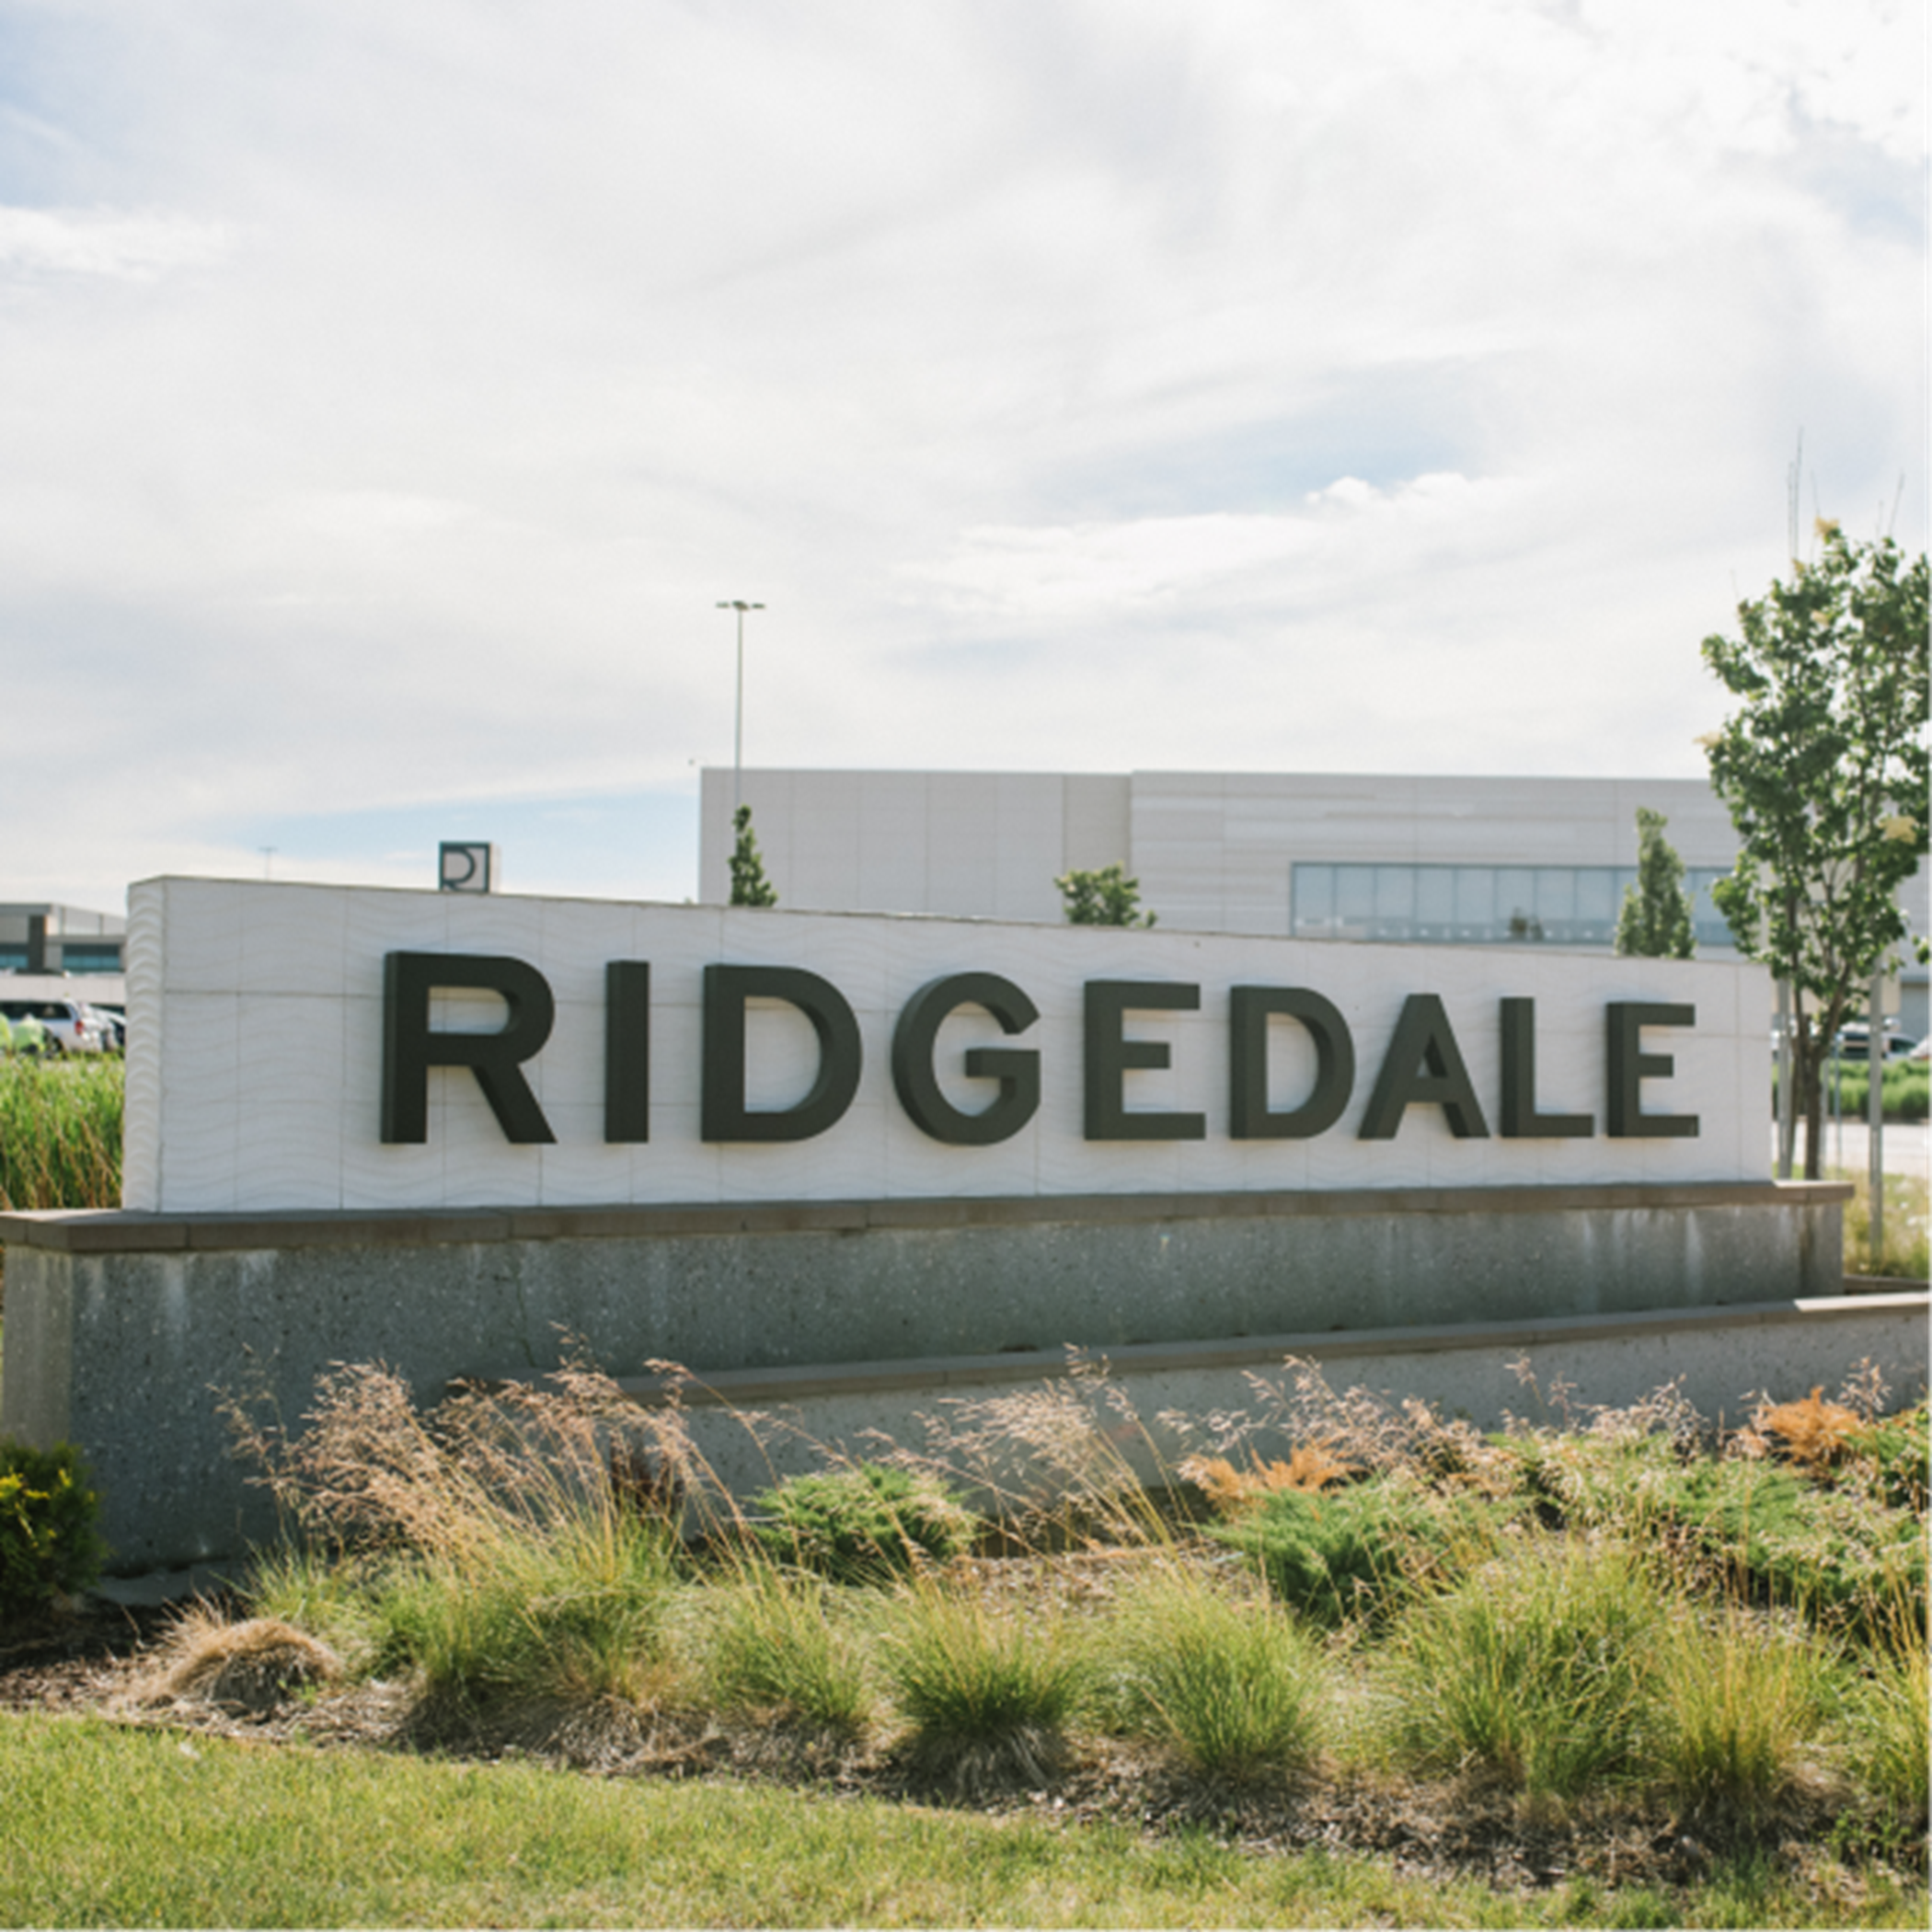 Ridgedale Mall sign